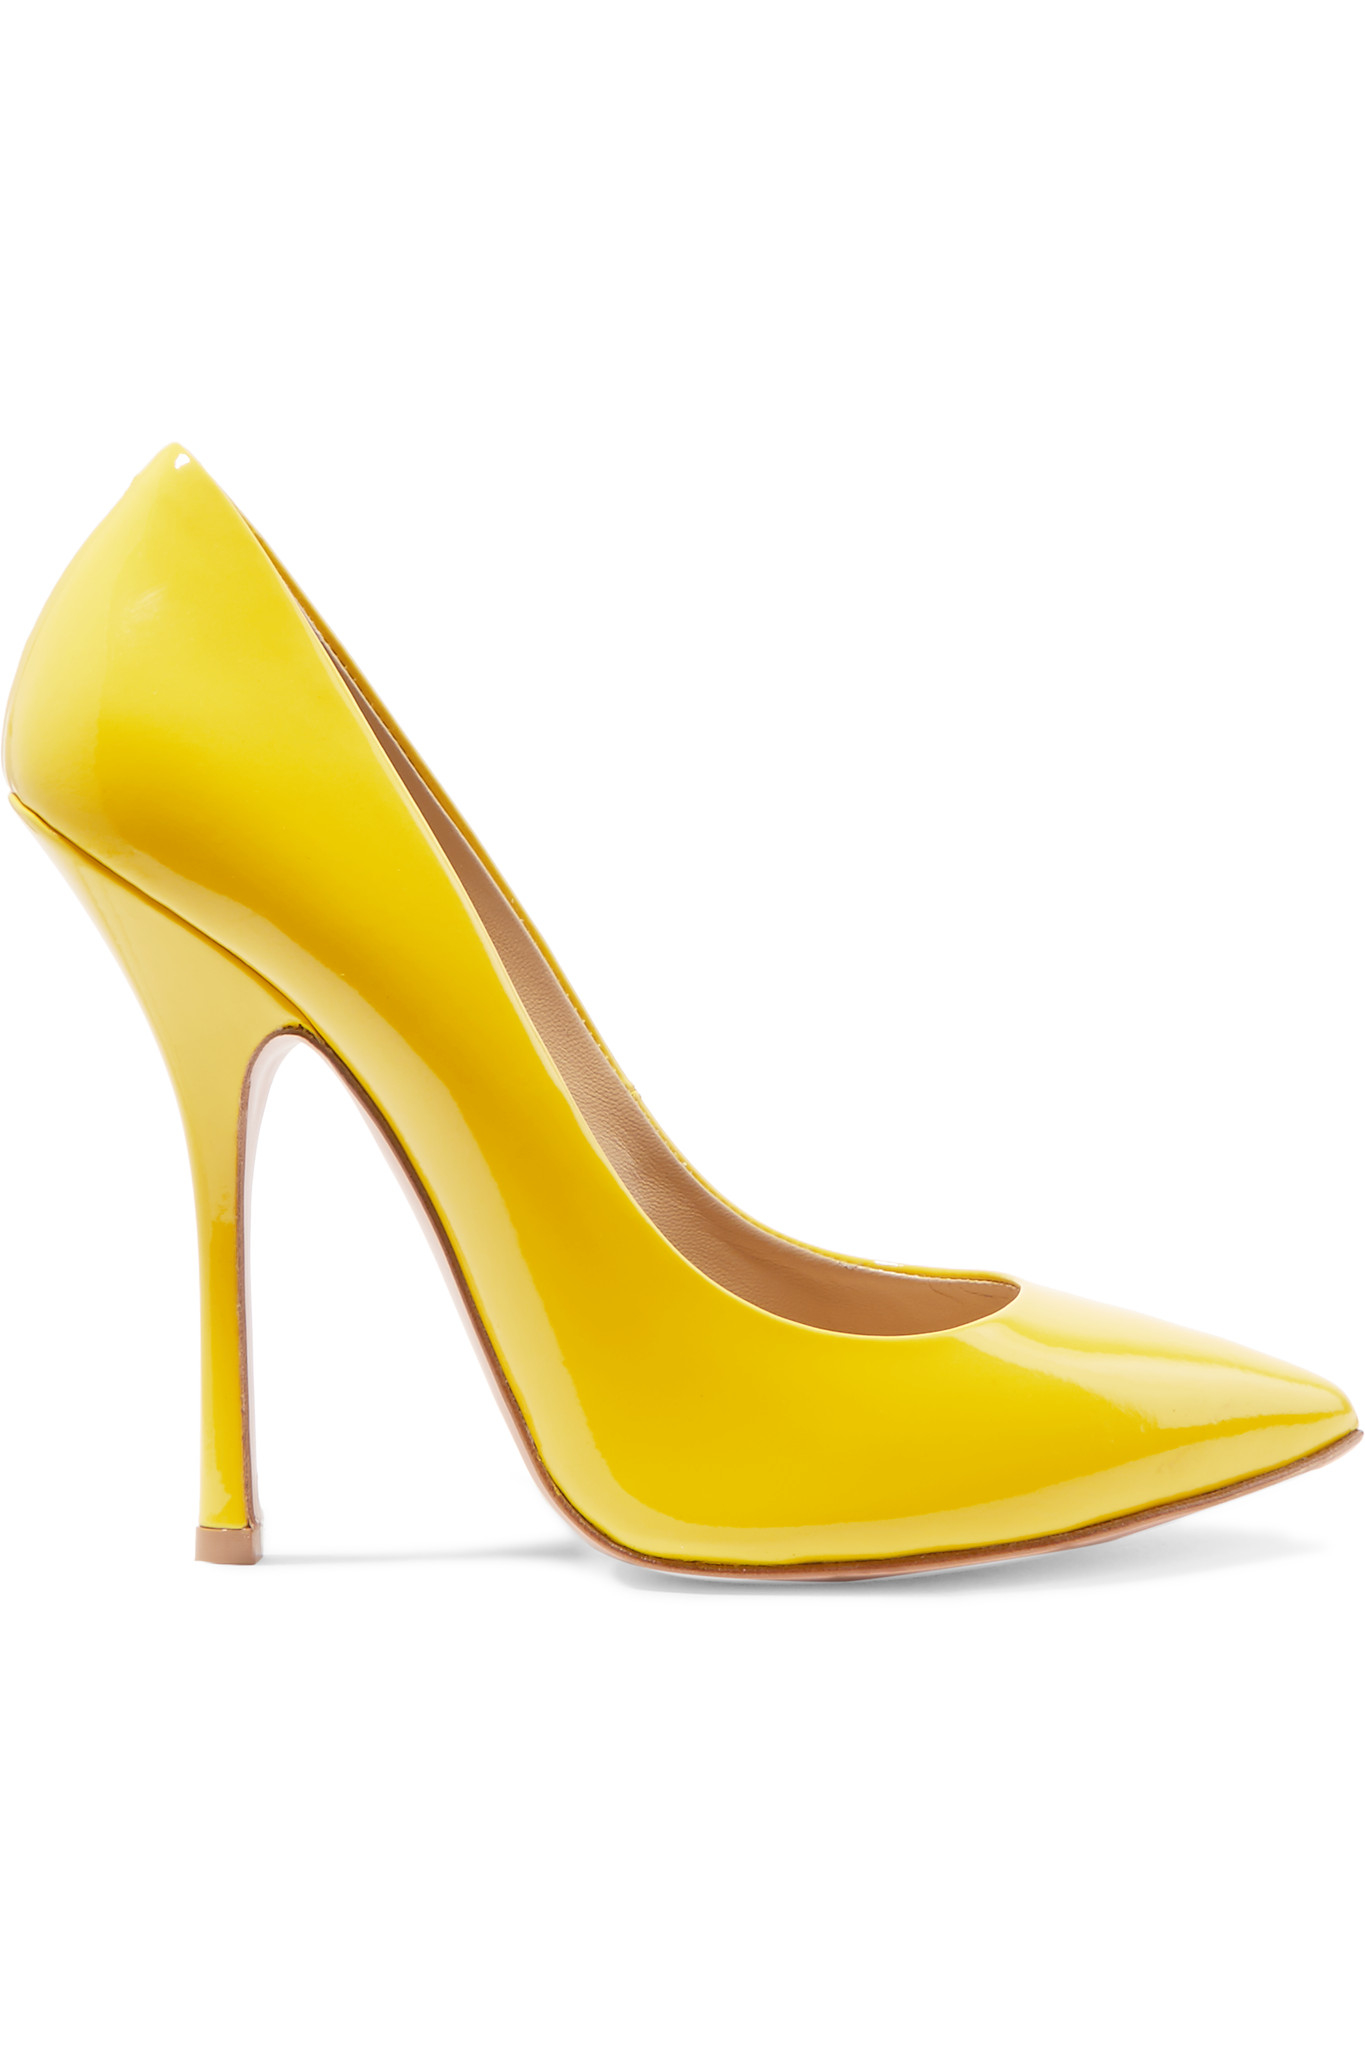 Lyst - Giuseppe zanotti Neon Patent-leather Pumps in Yellow